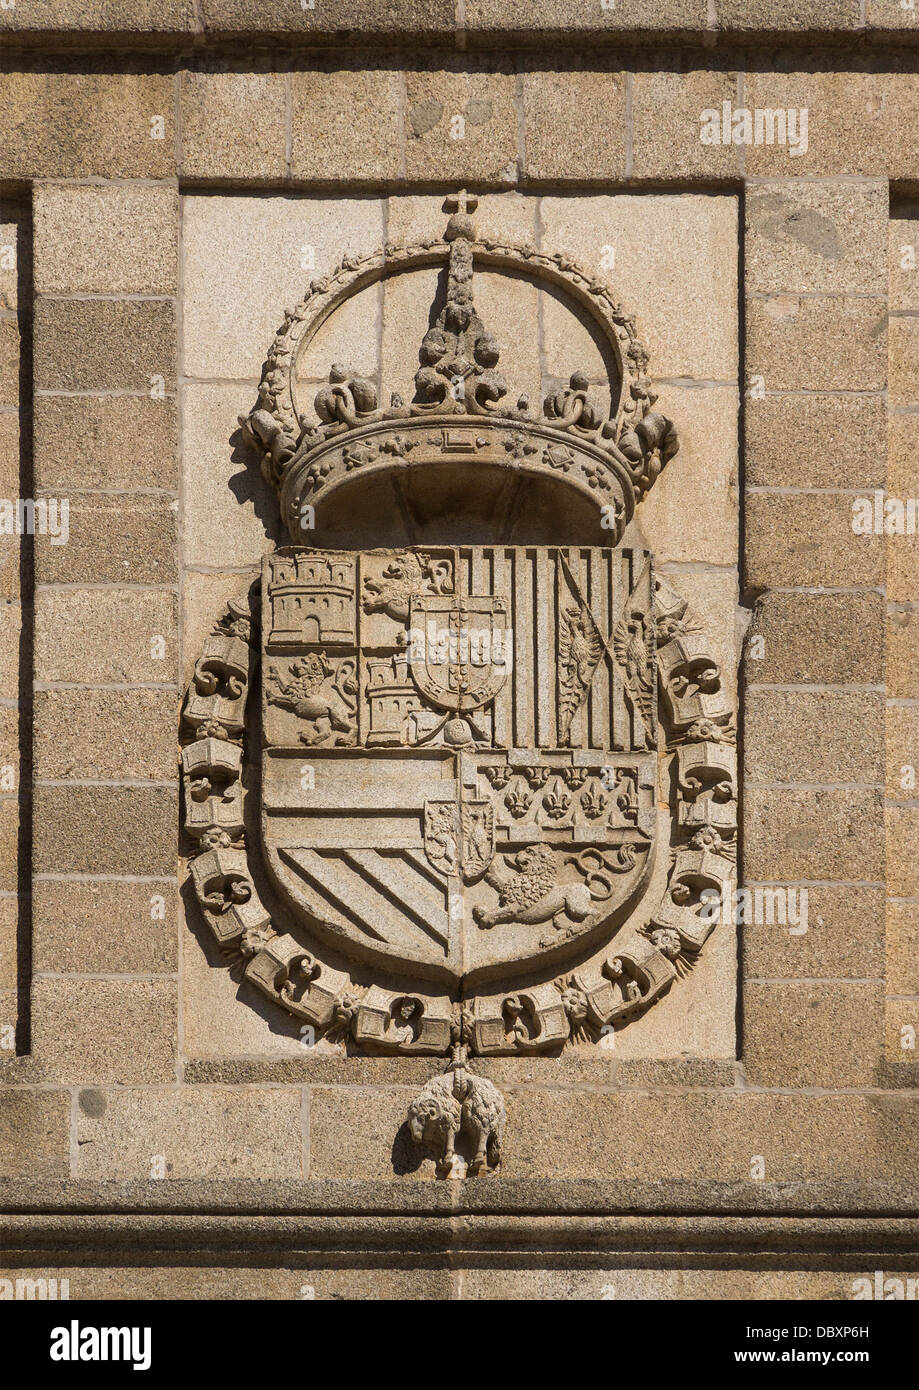 Relief of the CoA of Philip II of Spain, facade of the monastery of San Lorenzo de El Escorial, Spain. Stock Photo